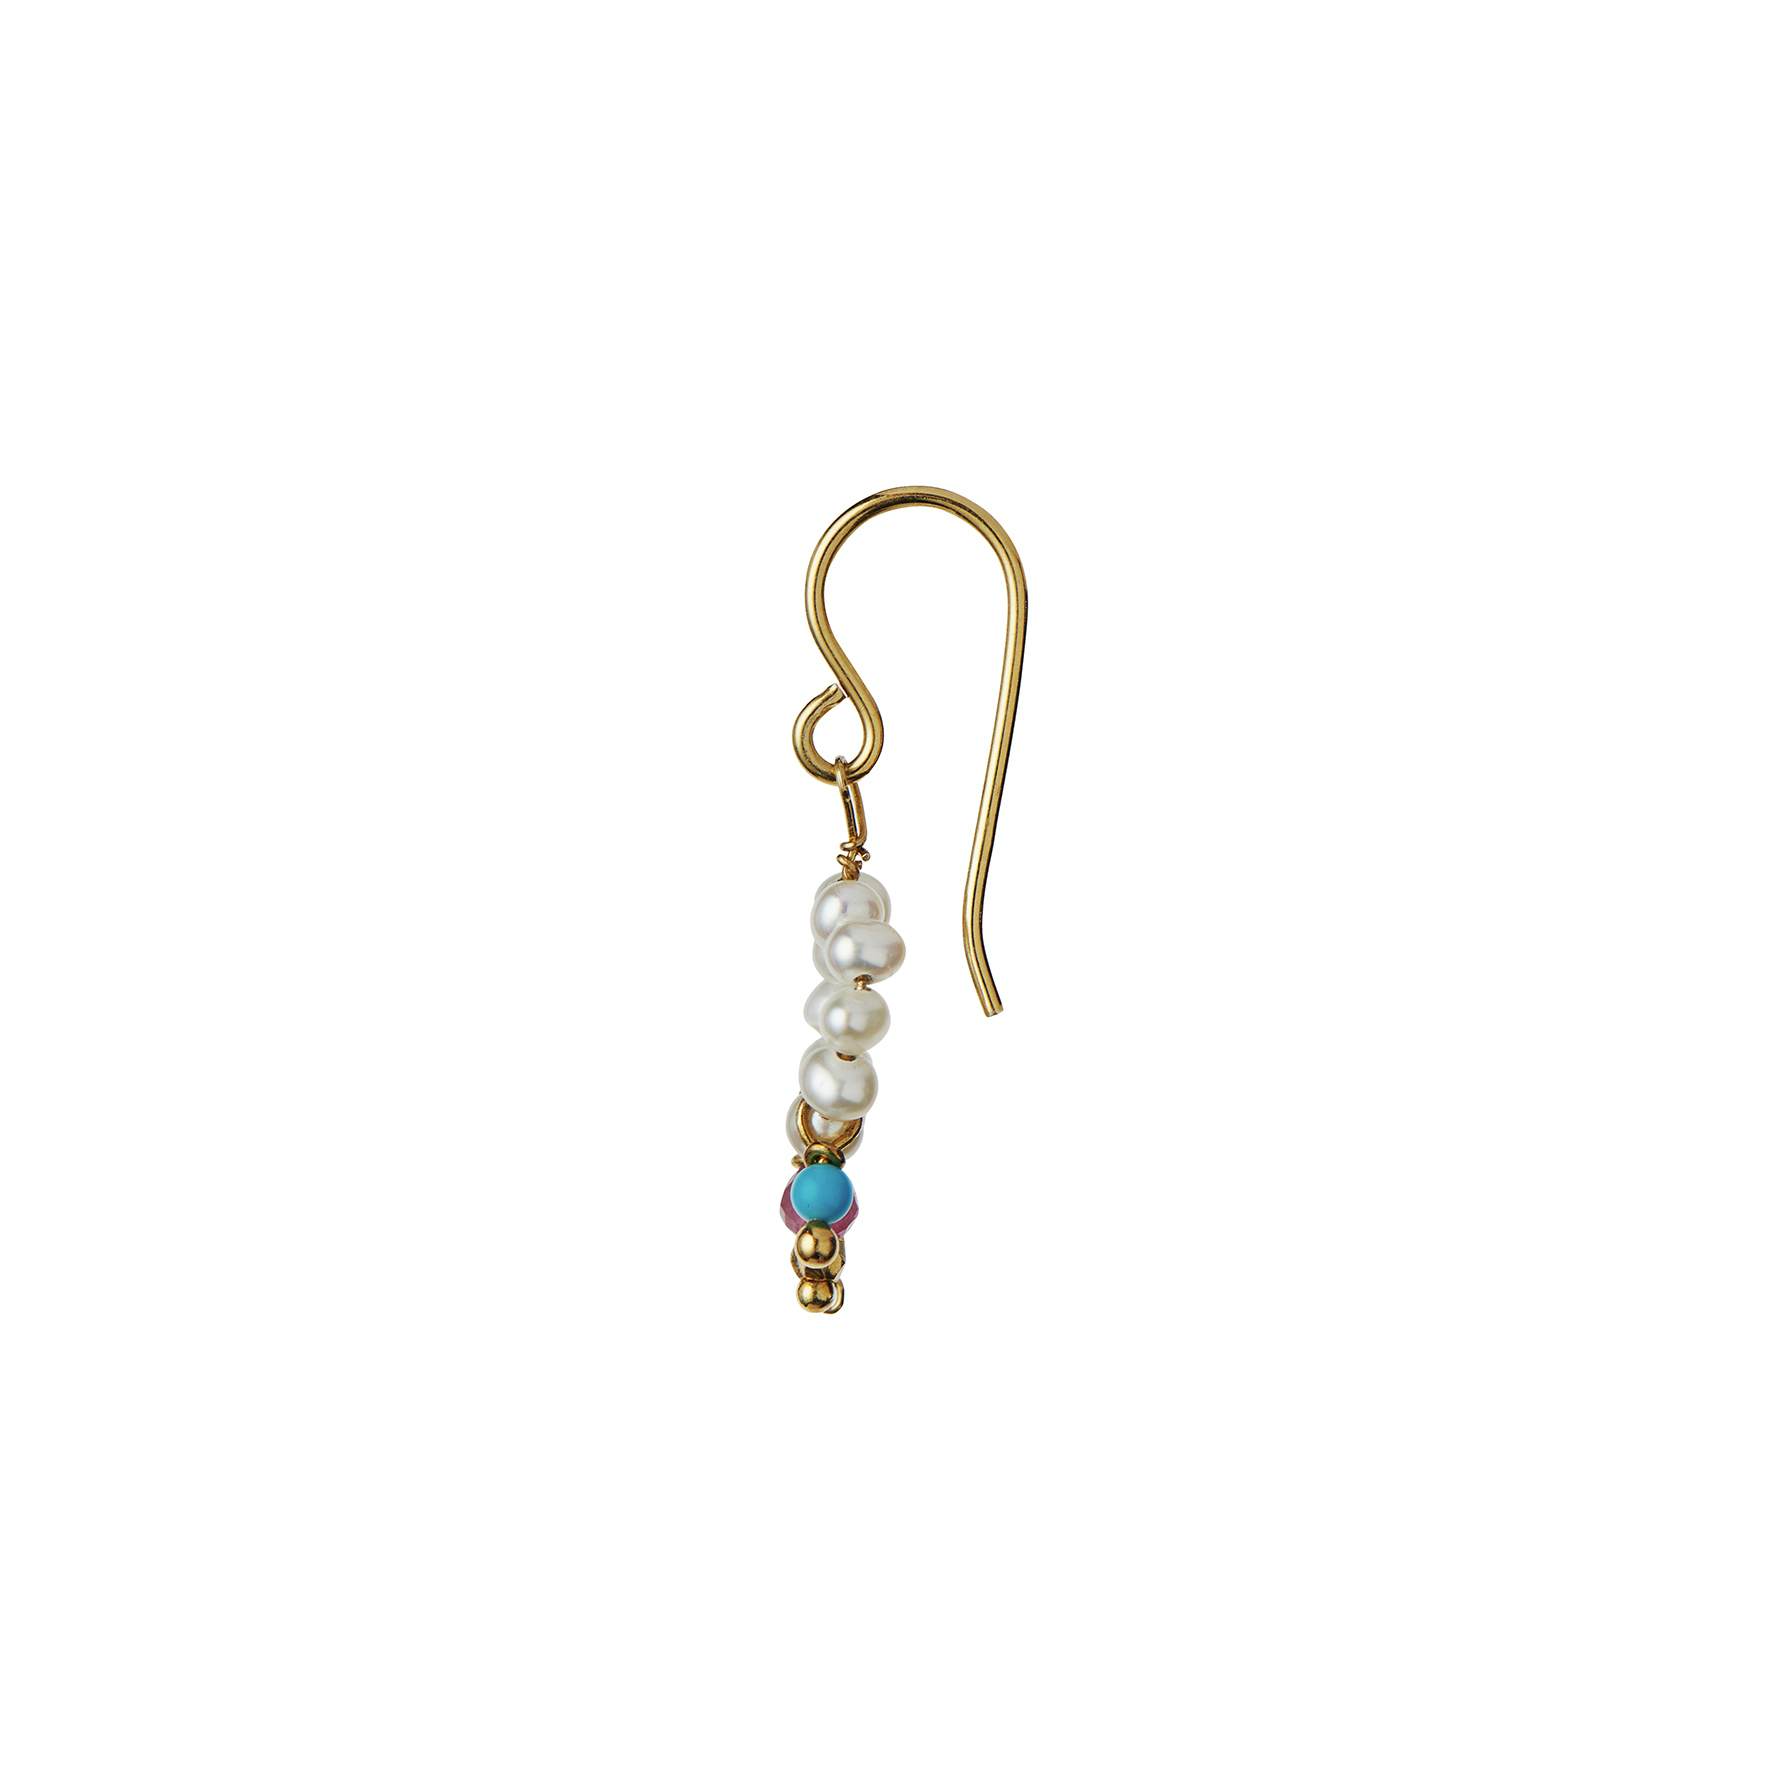 Petit Heavenly Pearl Dream Earring Turquoise & Pink Stones från STINE A Jewelry i Förgyllt-Silver Sterling 925